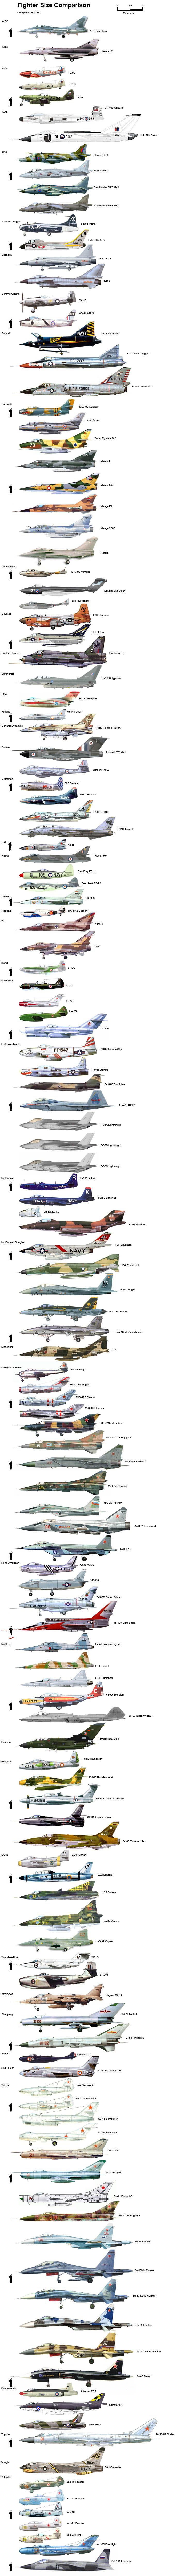 Fighter-Jet-Comparisons